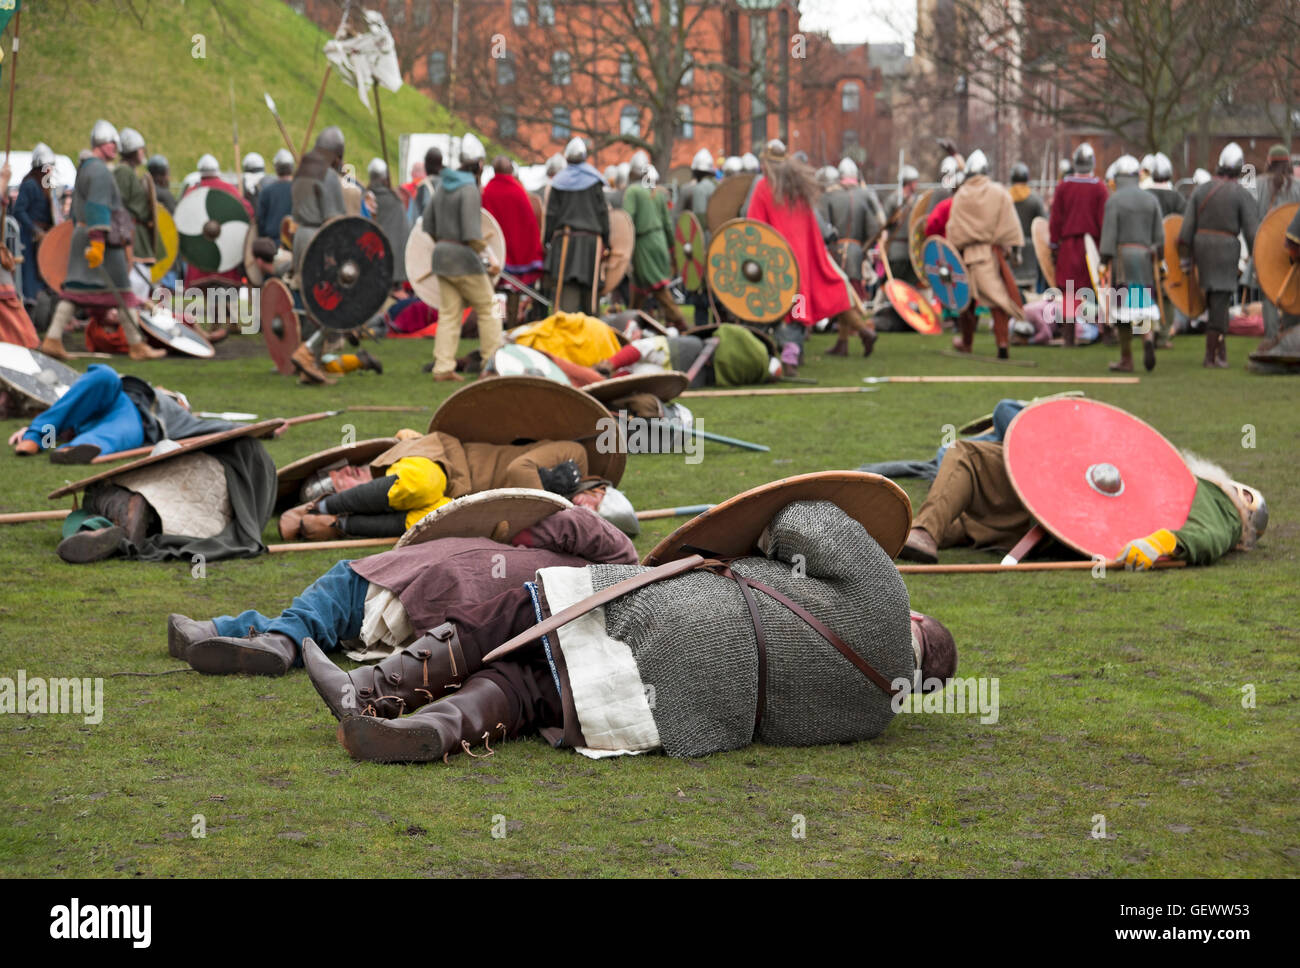 Skirmish between Vikings and Anglo Saxons at the Viking Festival. Stock Photo